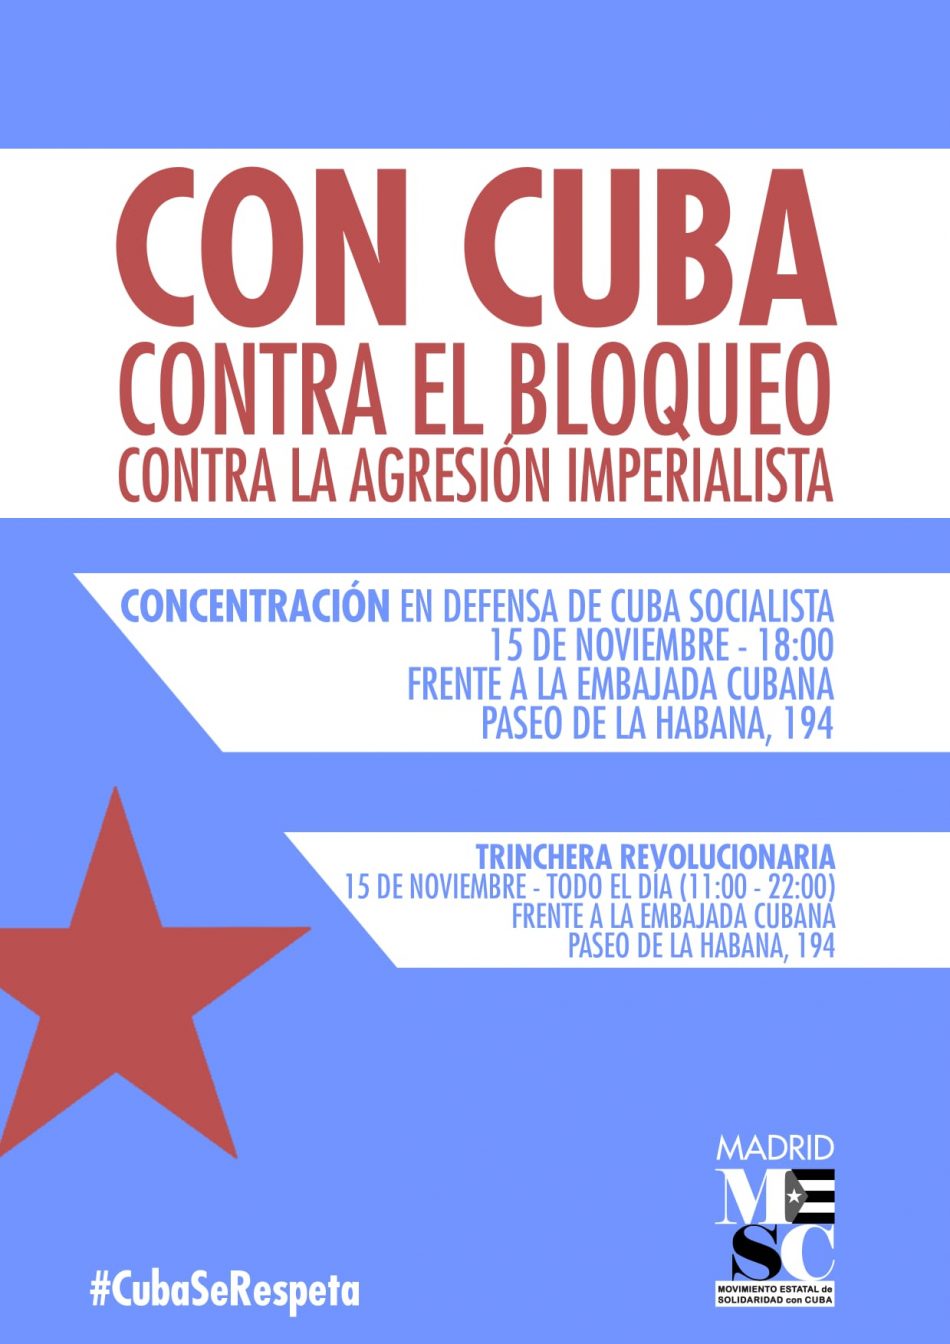 ¡Cuba se respeta! Ni golpes blandos ni injerencias imperialistas:  ¡Viva Cuba Socialista!